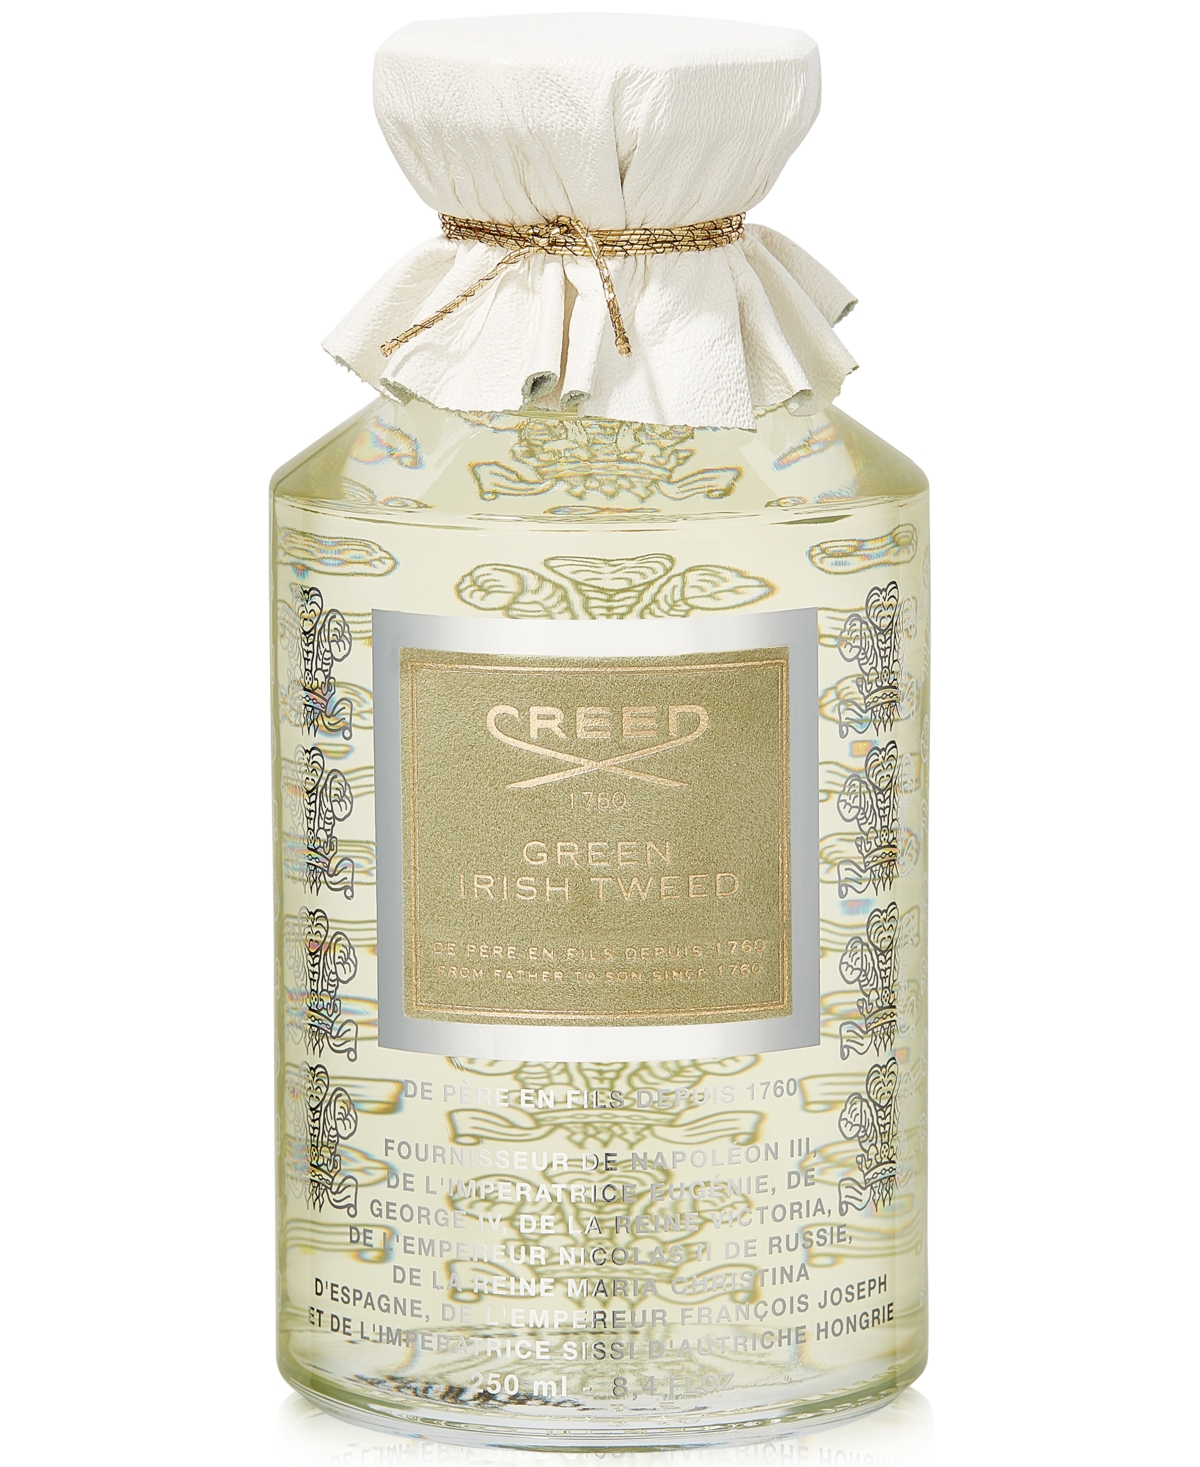 Creed Green Irish Tweed, 8.4 Oz.